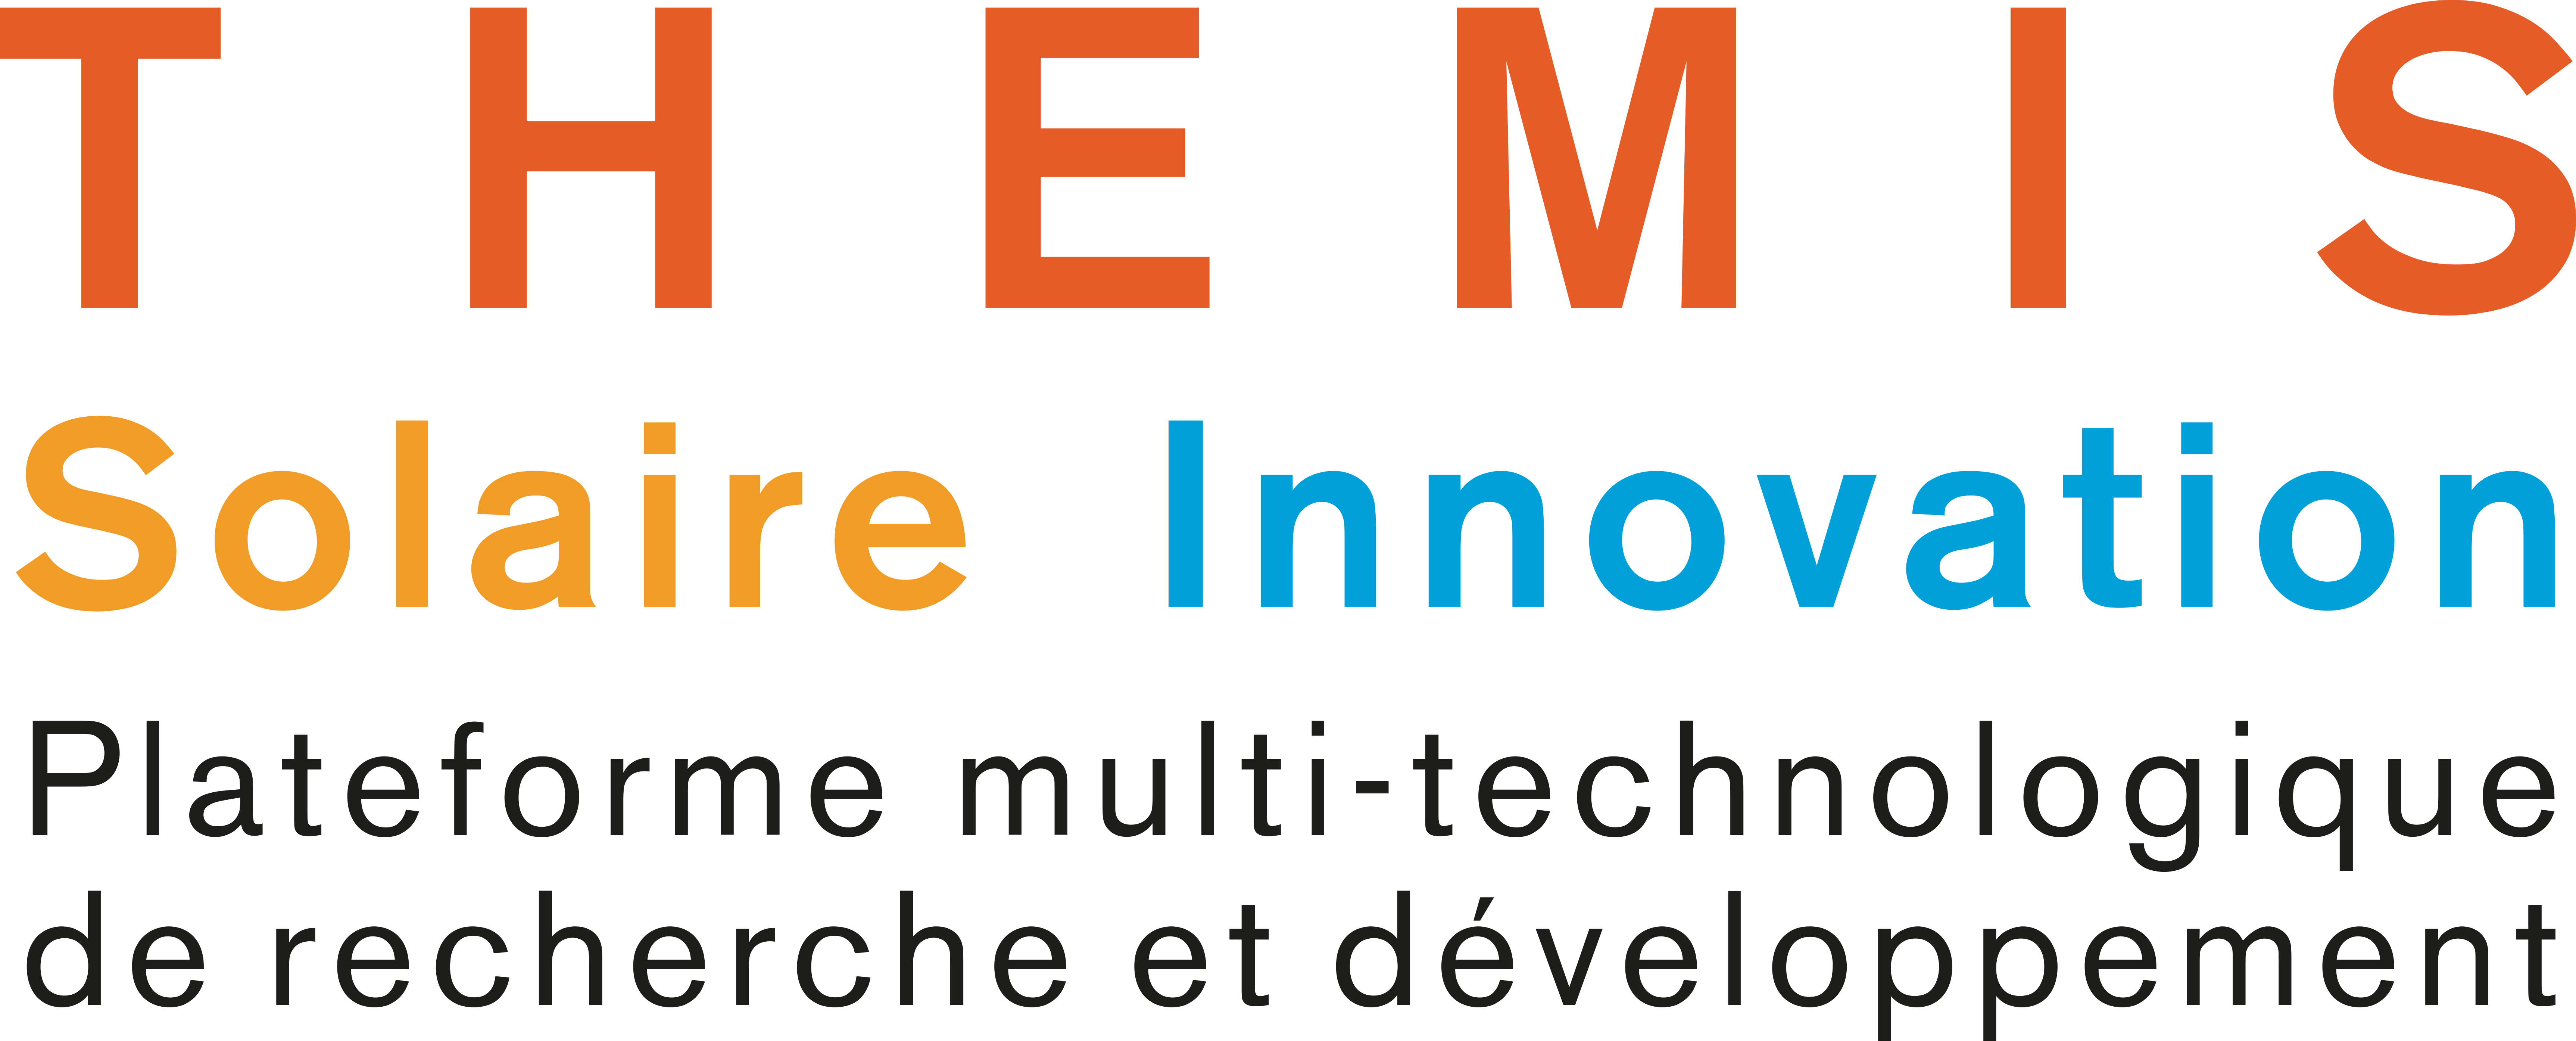 Logo officiel Themis solaire innovation